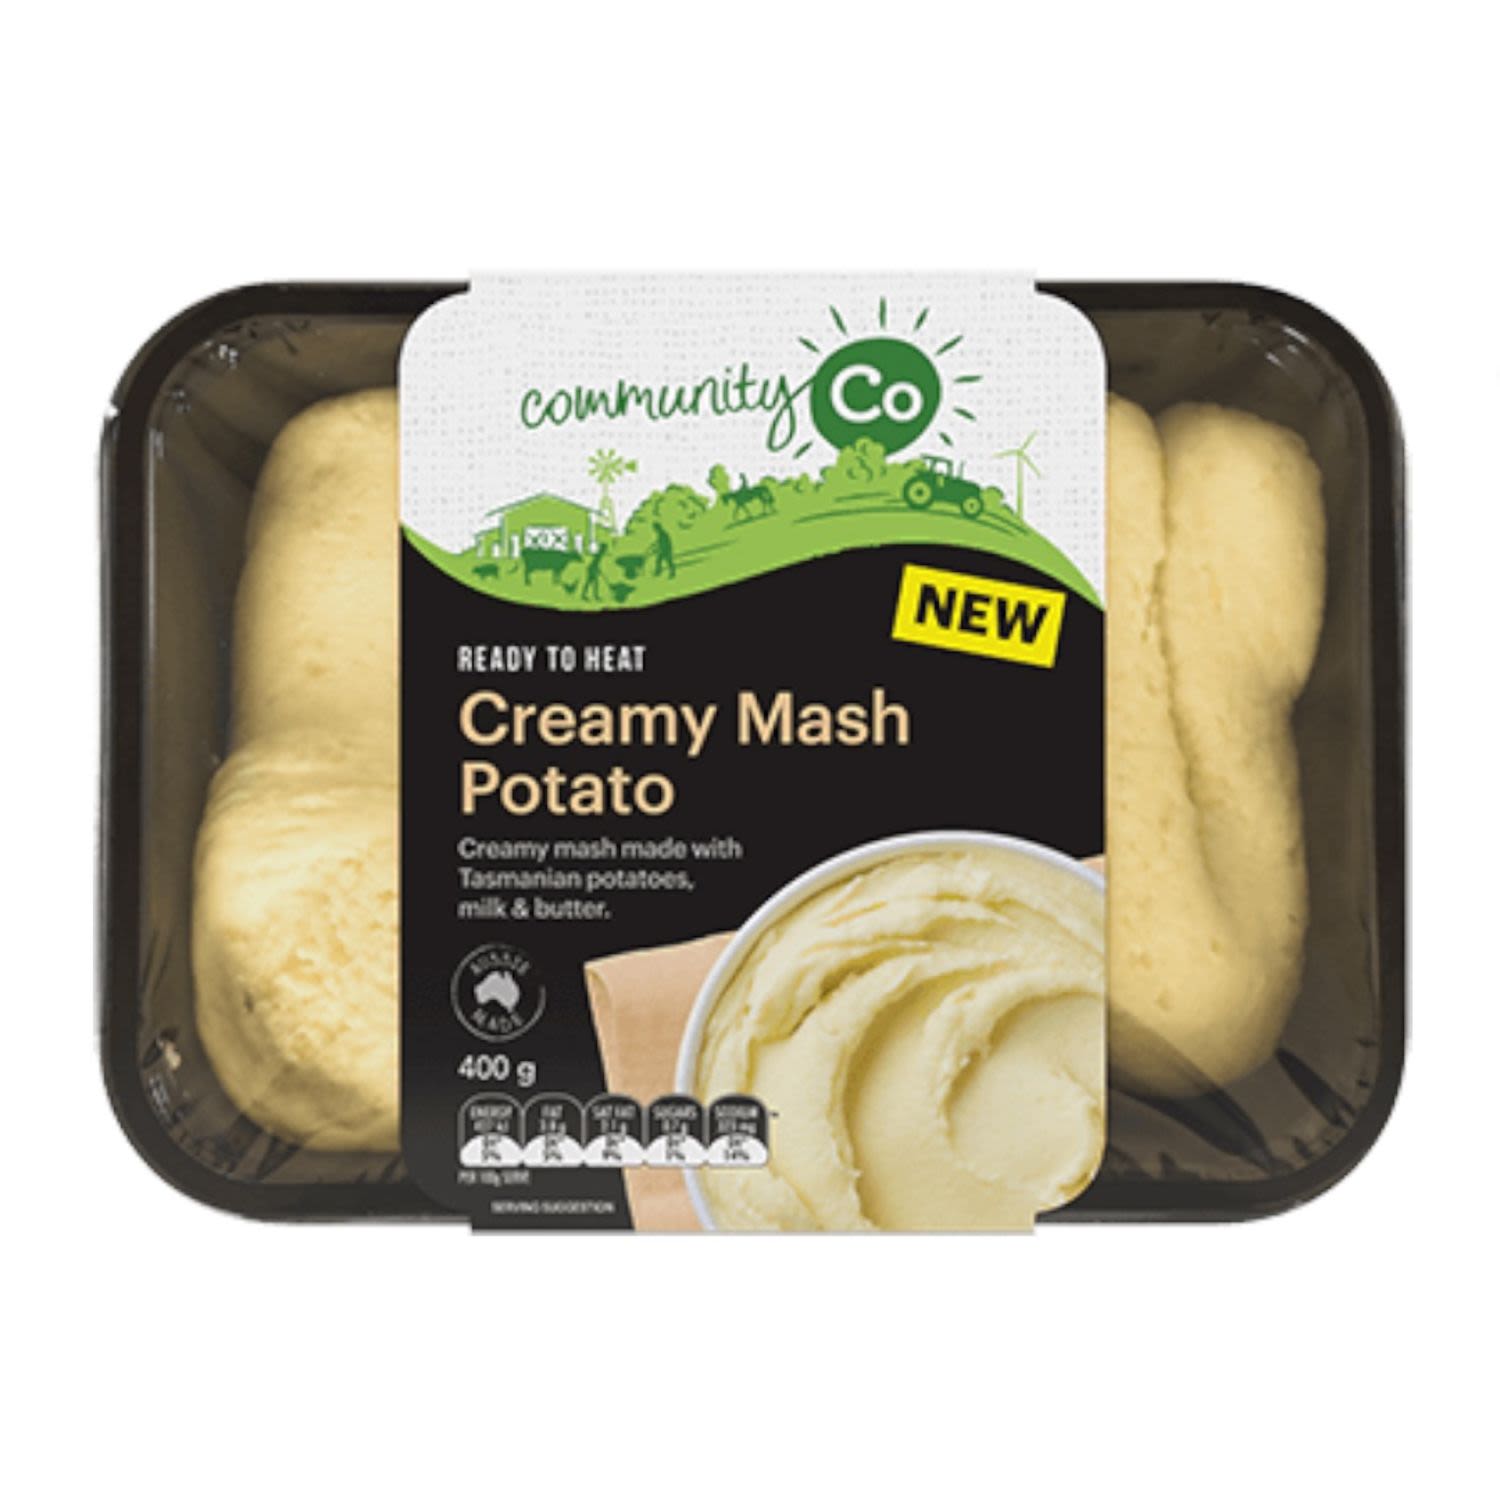 Community Co Creamy Mash Potatoes, 400 Gram